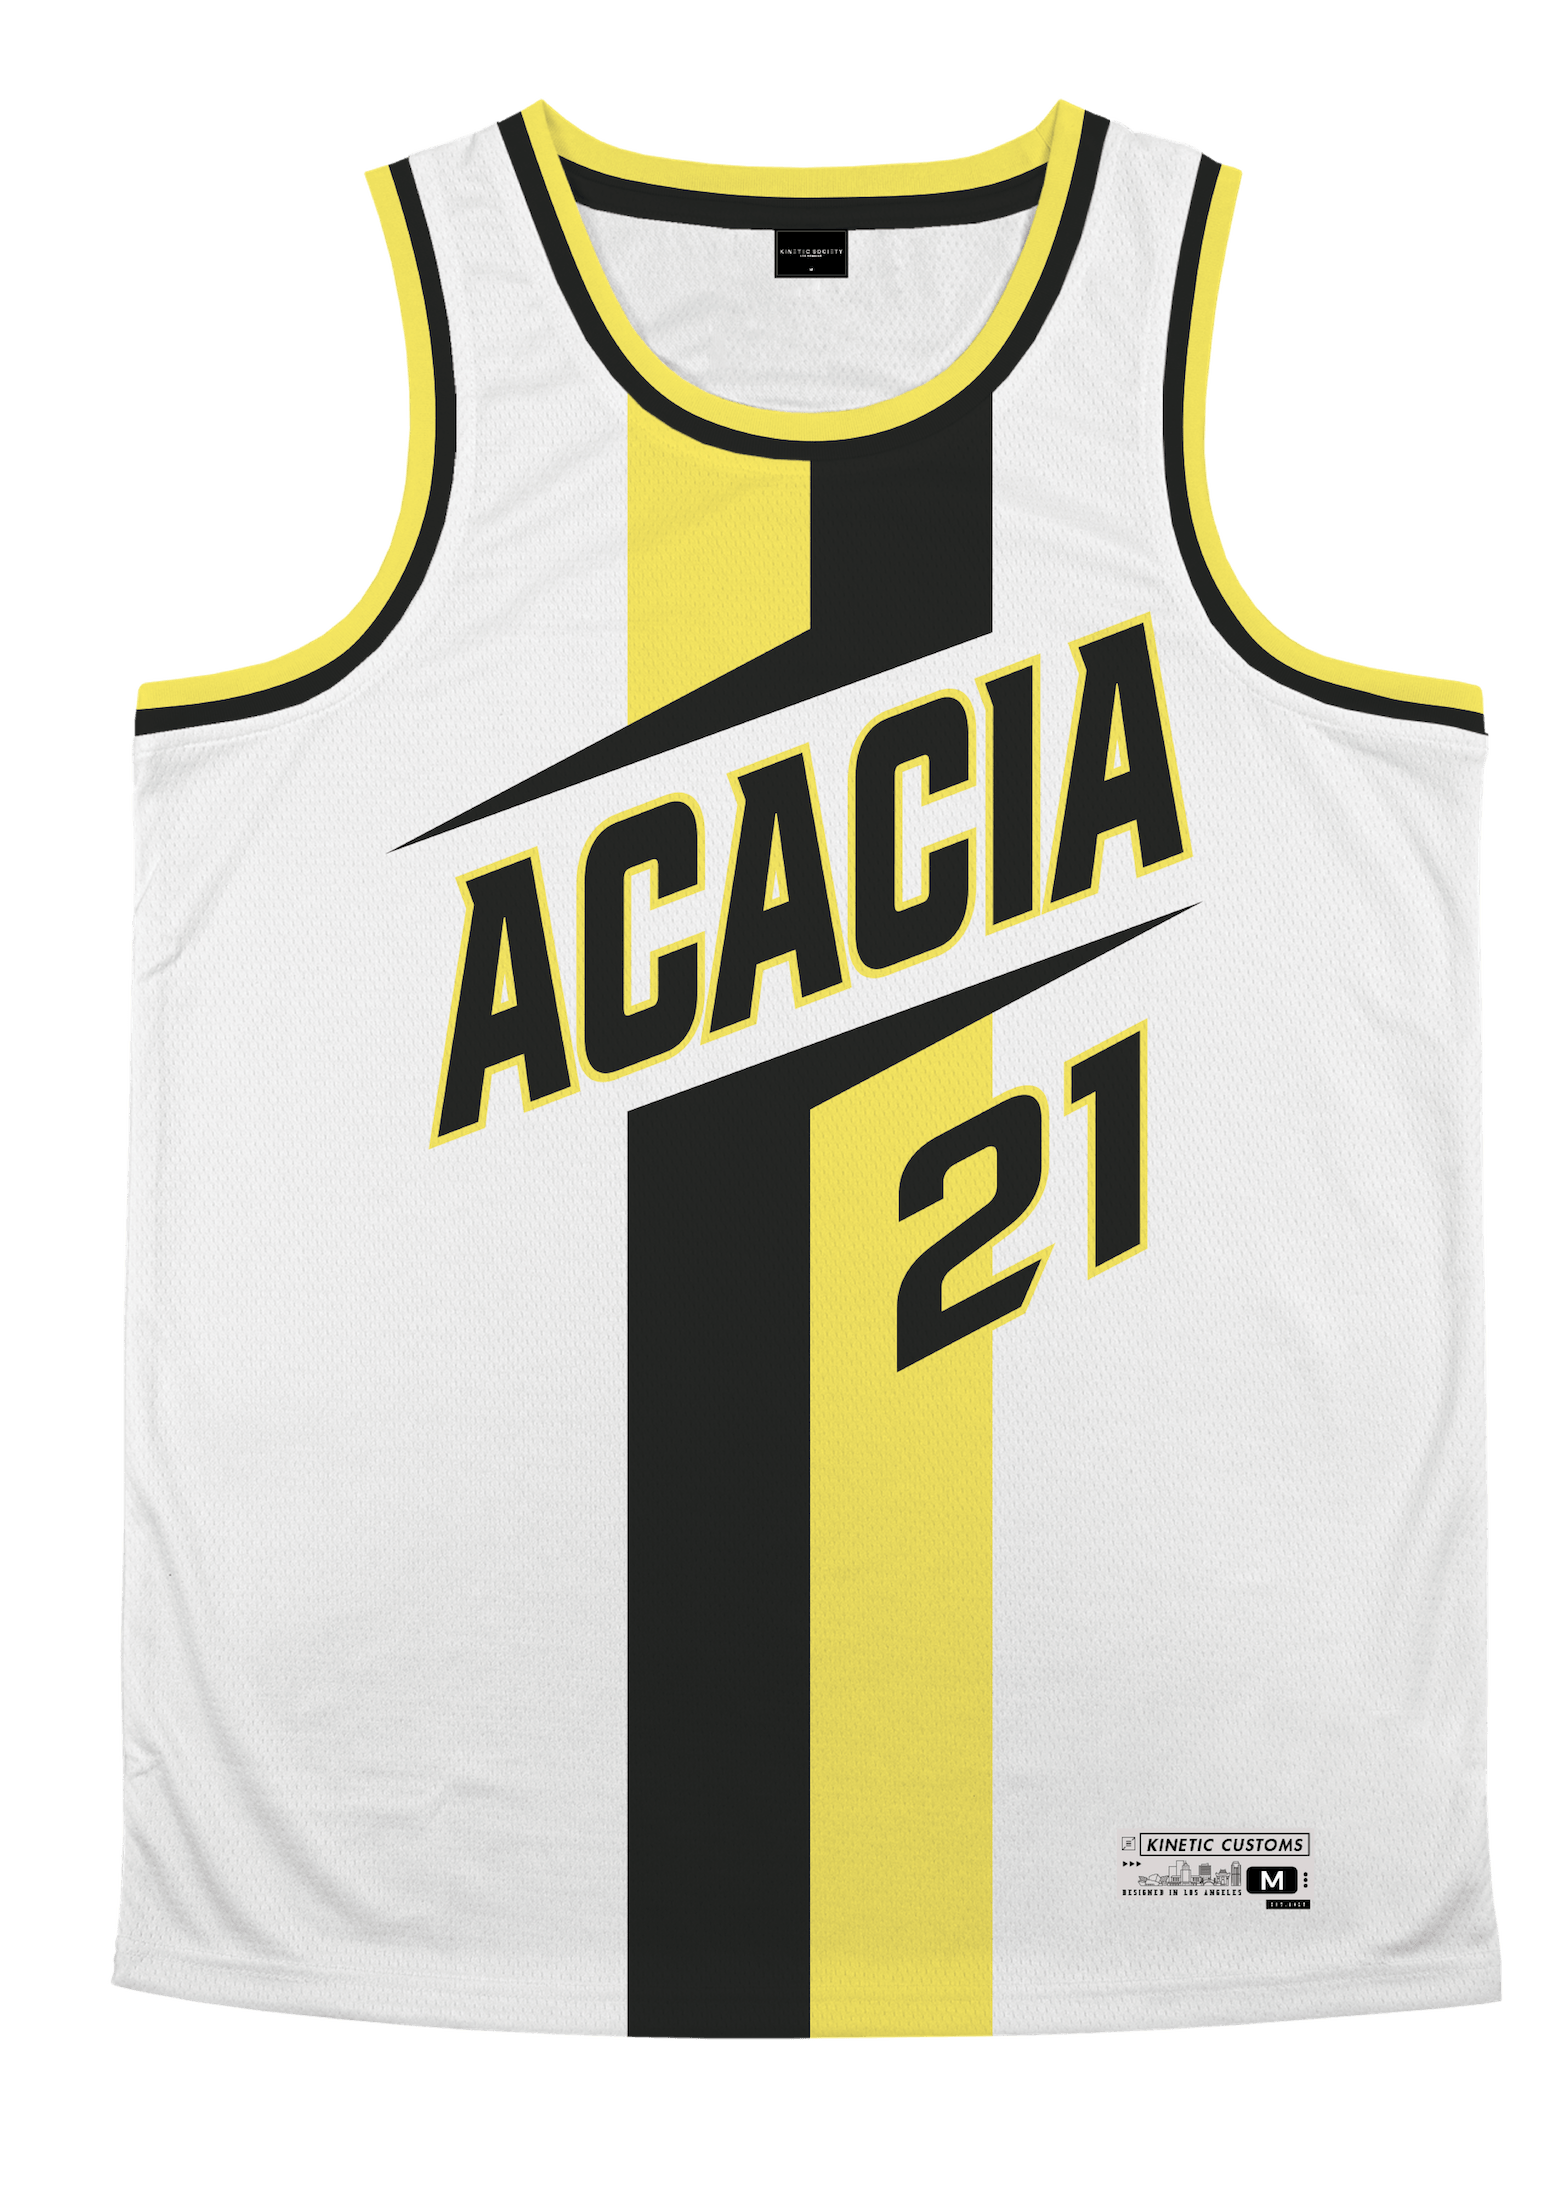 ACACIA - Middle Child Basketball Jersey Premium Basketball Kinetic Society LLC 